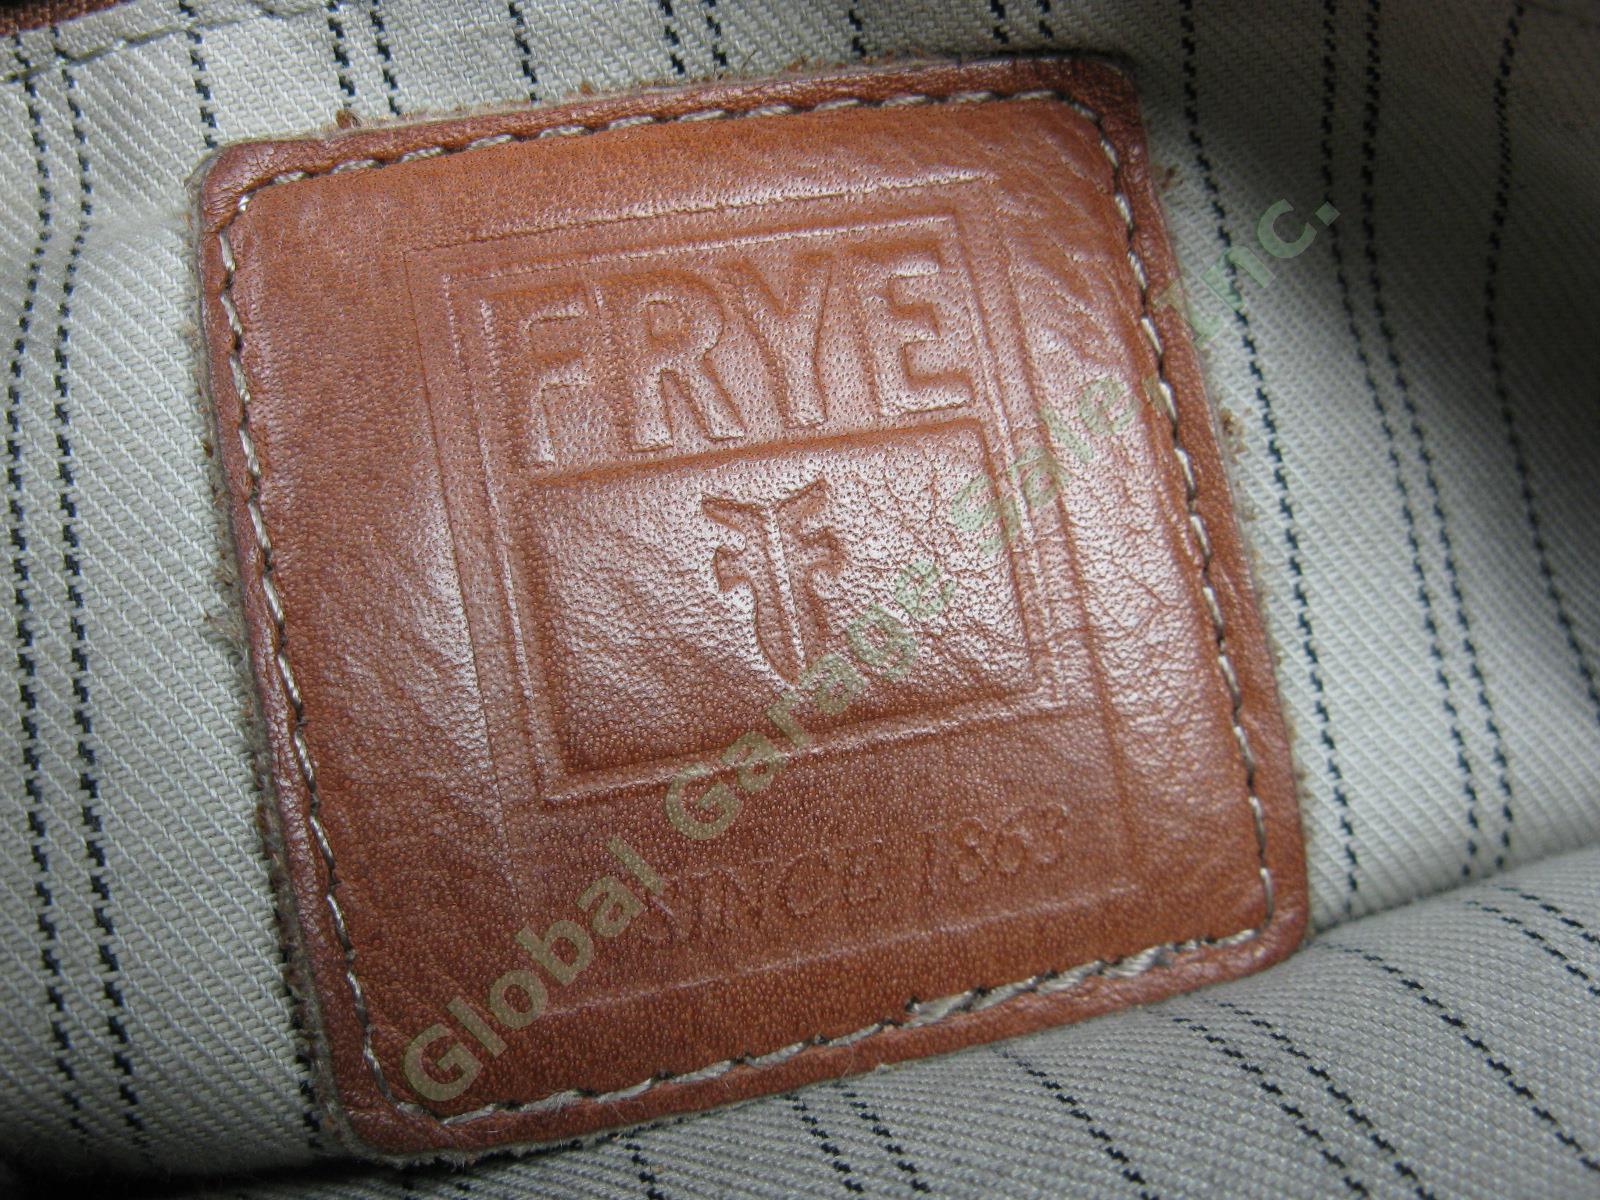 Frye Campus Saddle Cross Body Leather Handbag Clutch DB891 $298 Retail NORESERVE 10